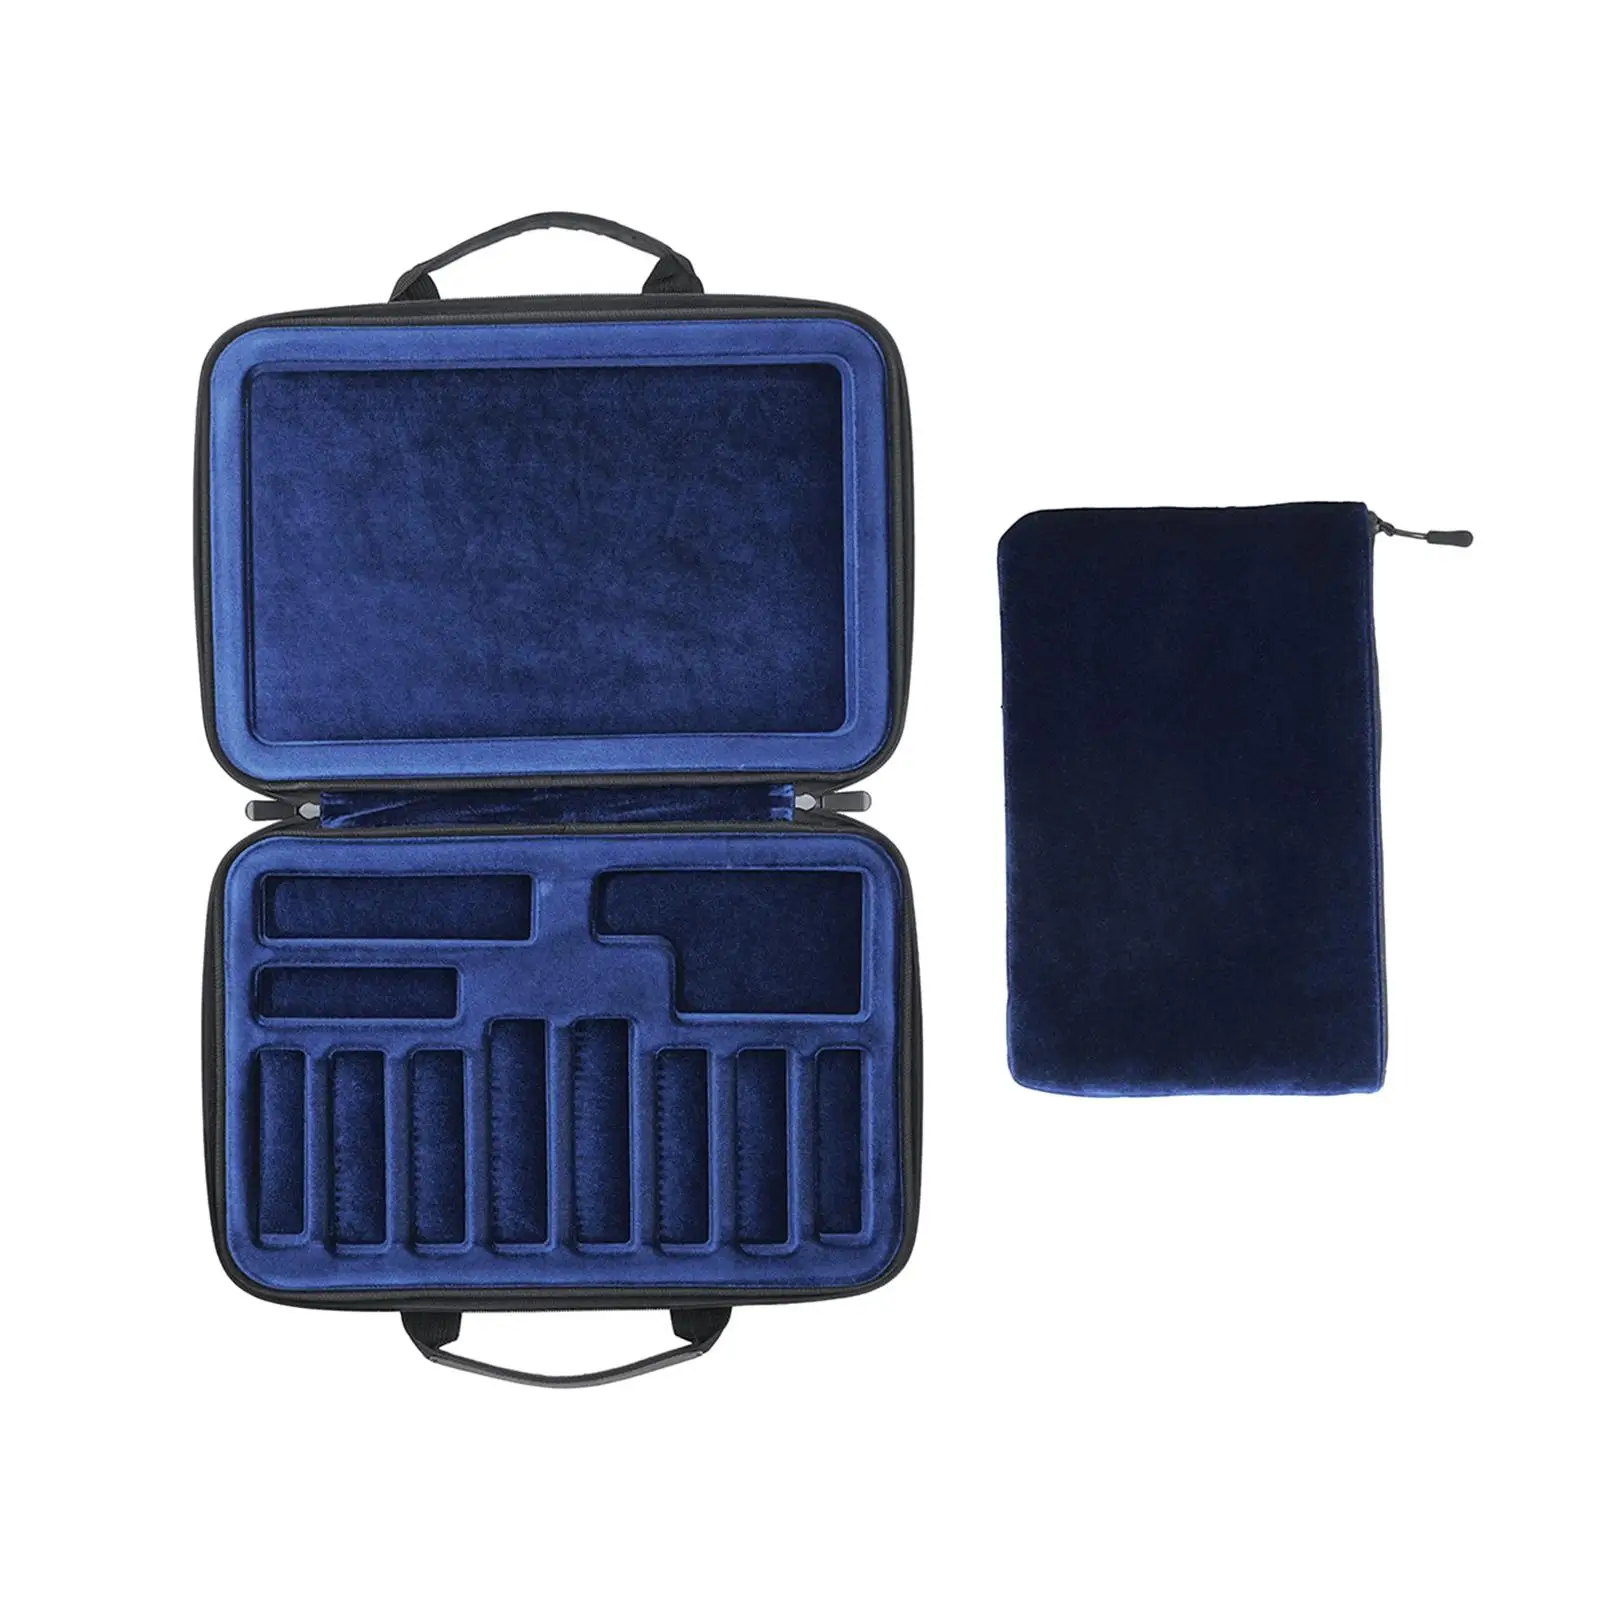 Saxphone Mouthpiece Case, Woodwind Mouthpiece Case, Hard Case Pouch 12 Piece with Flannel Bag Storage Bag Saxophone Reed Case